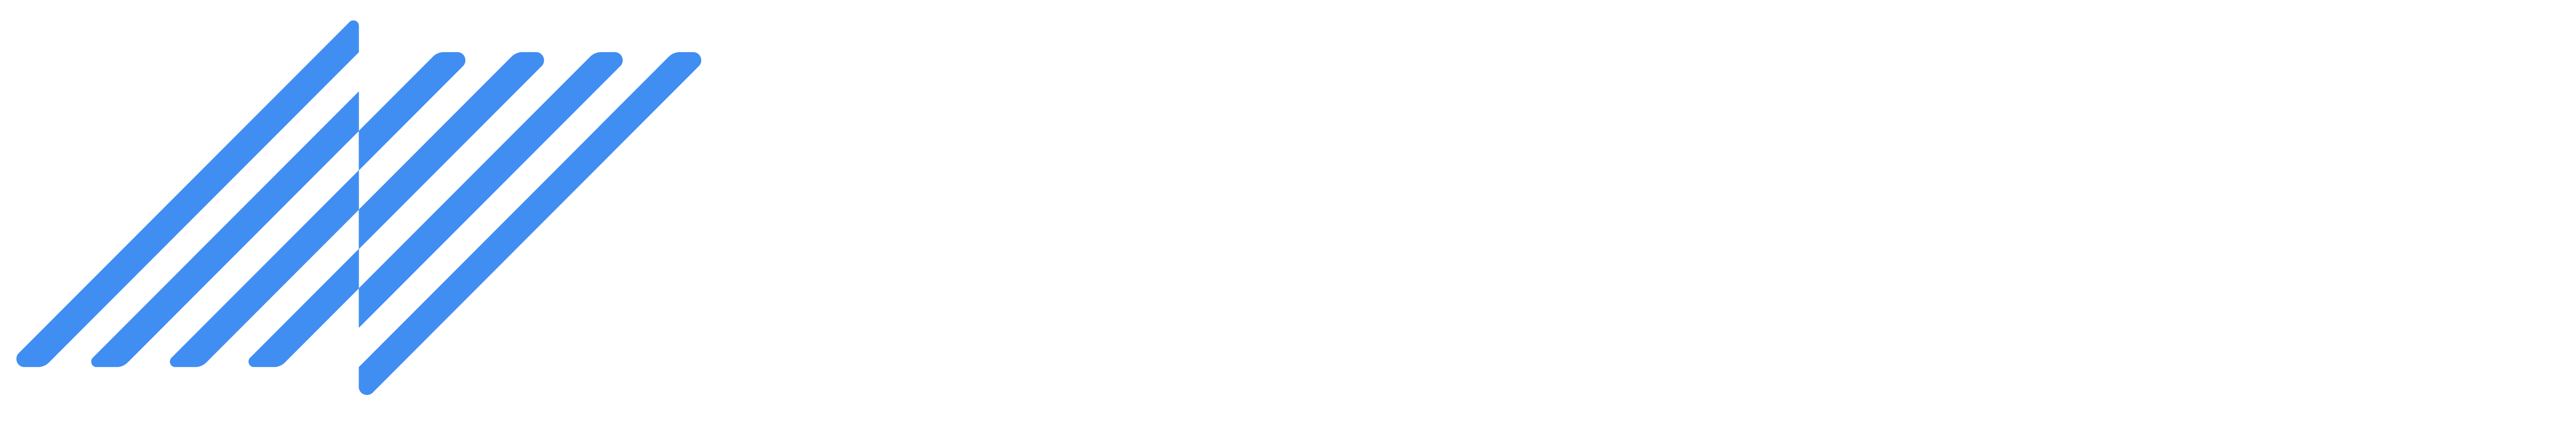 agility final logo-06